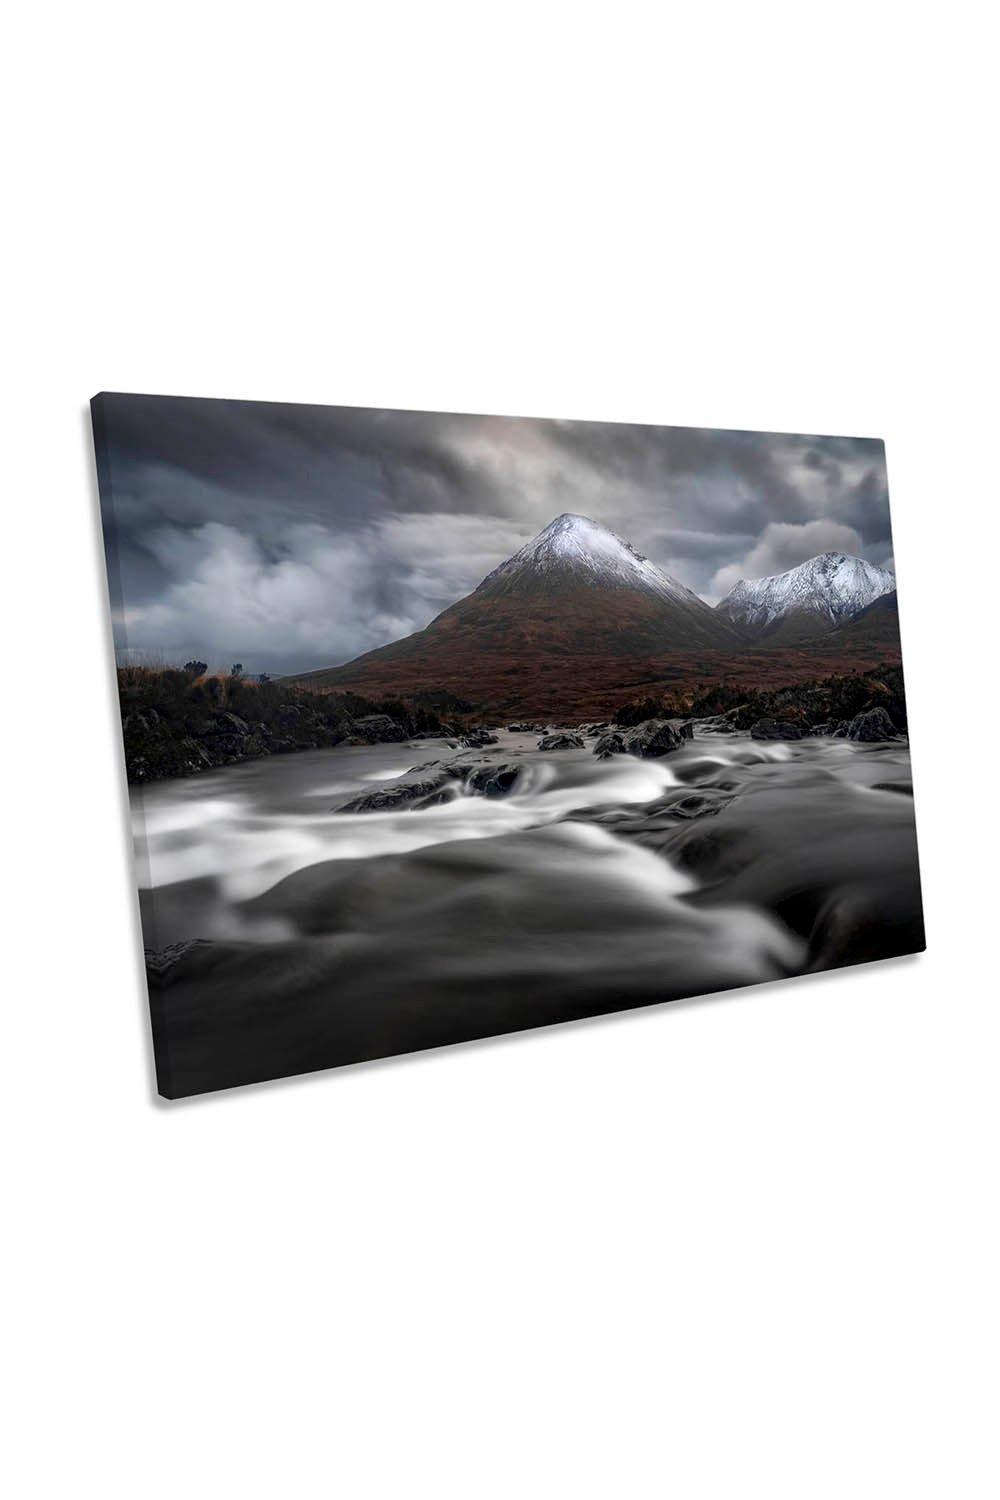 Isle of Skye Scotland Winter Mountain Canvas Wall Art Picture Print